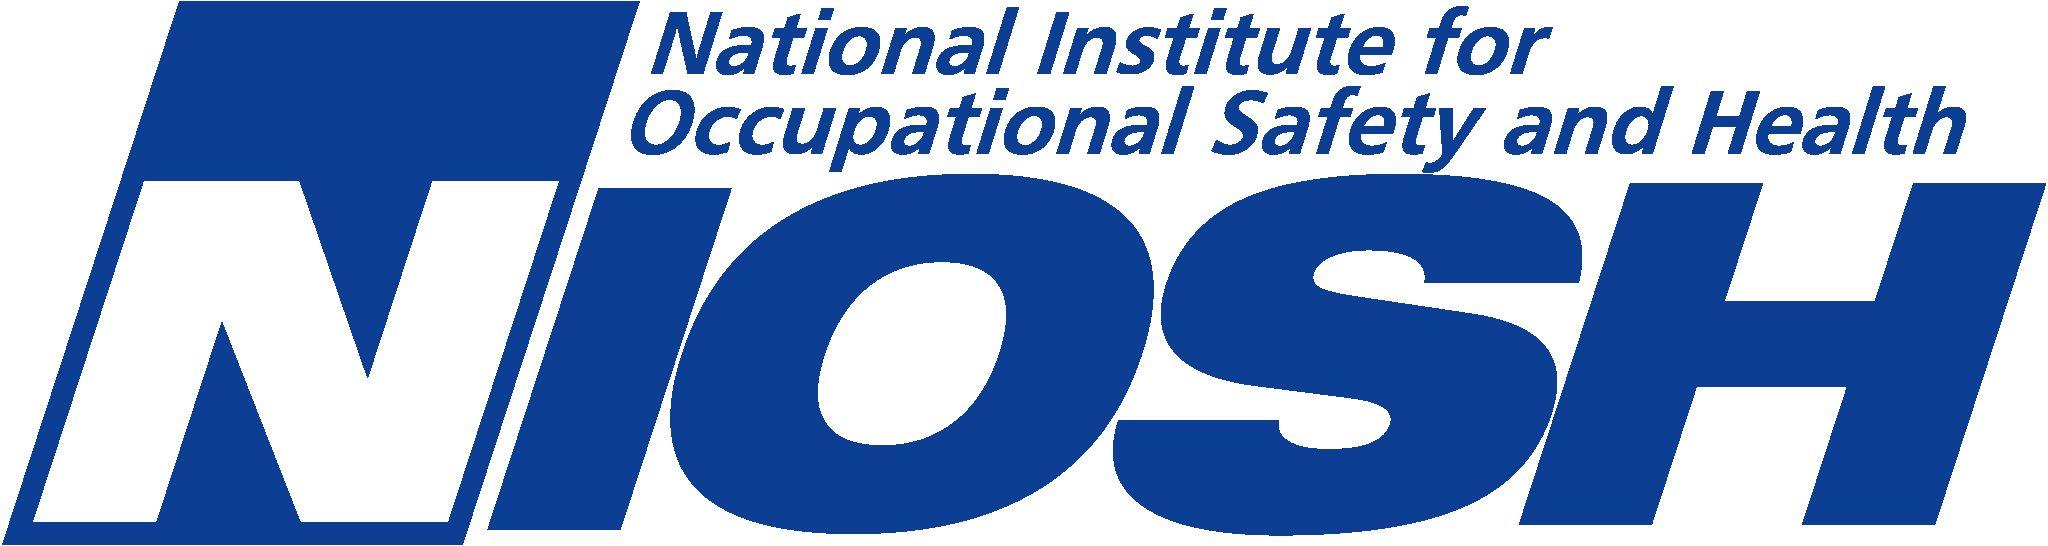 NIOSH Logo - NIOSH Logo